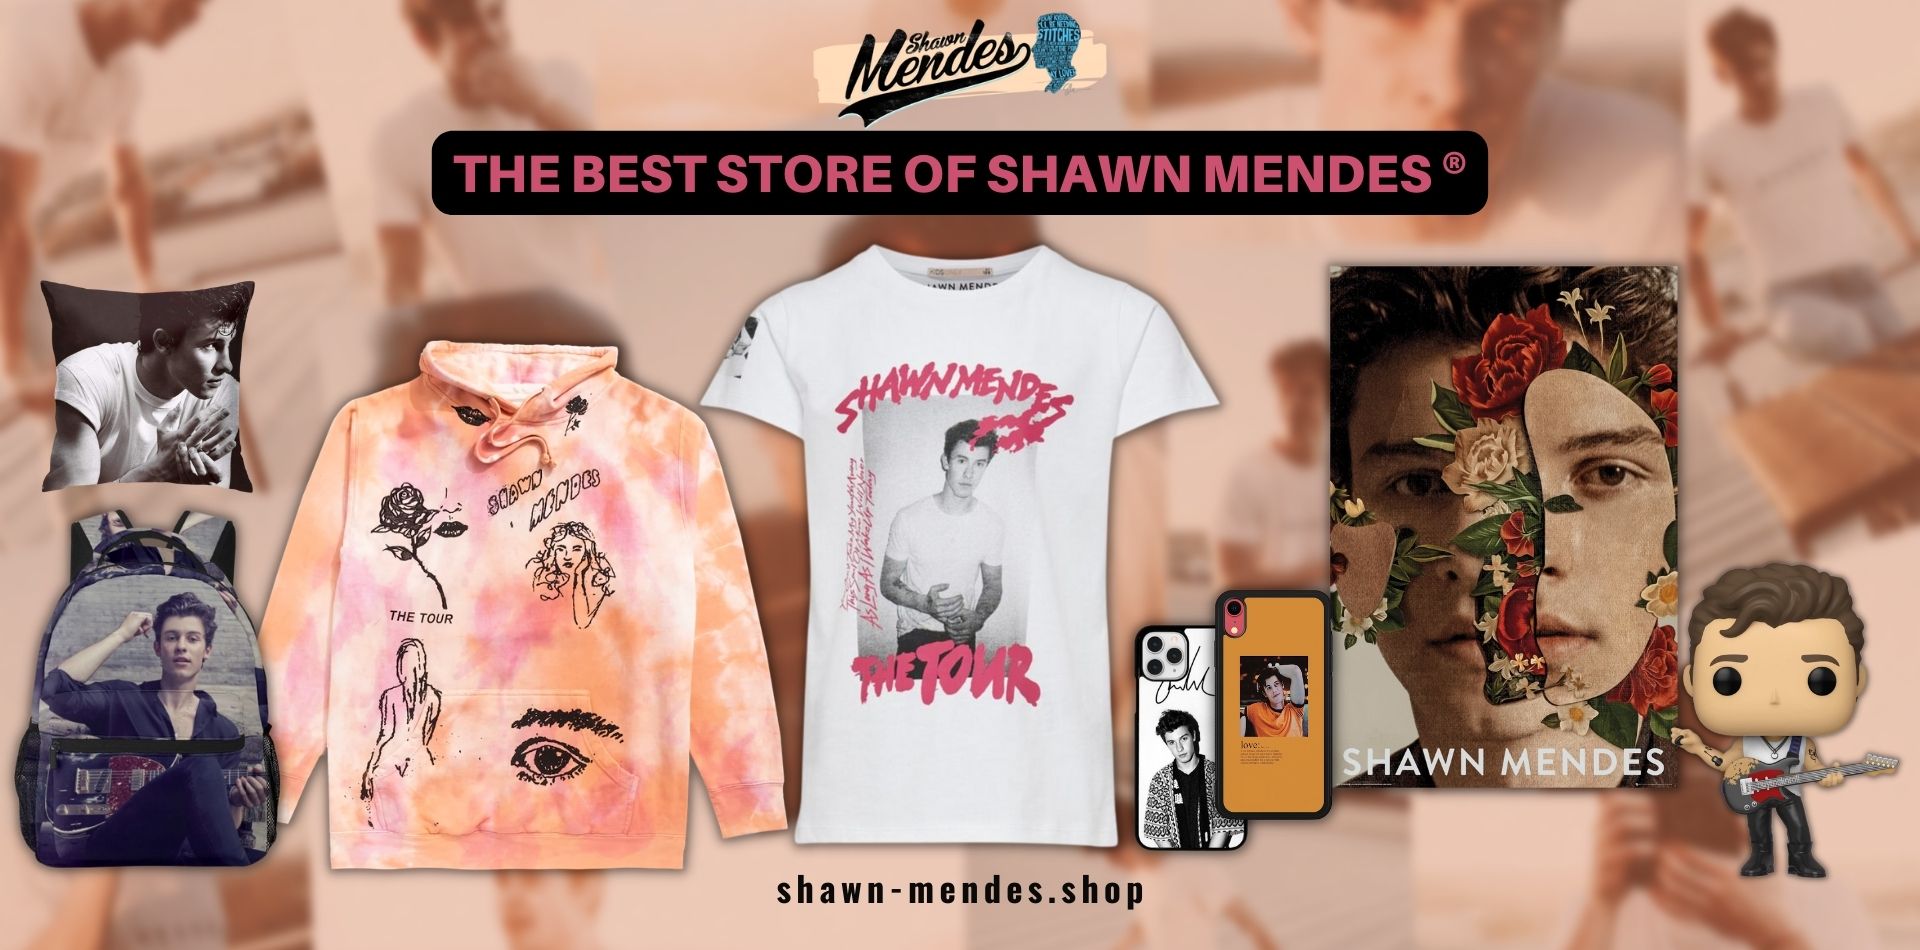 Shawn Mendes Shop Web Banner - Shawn Mendes Shop